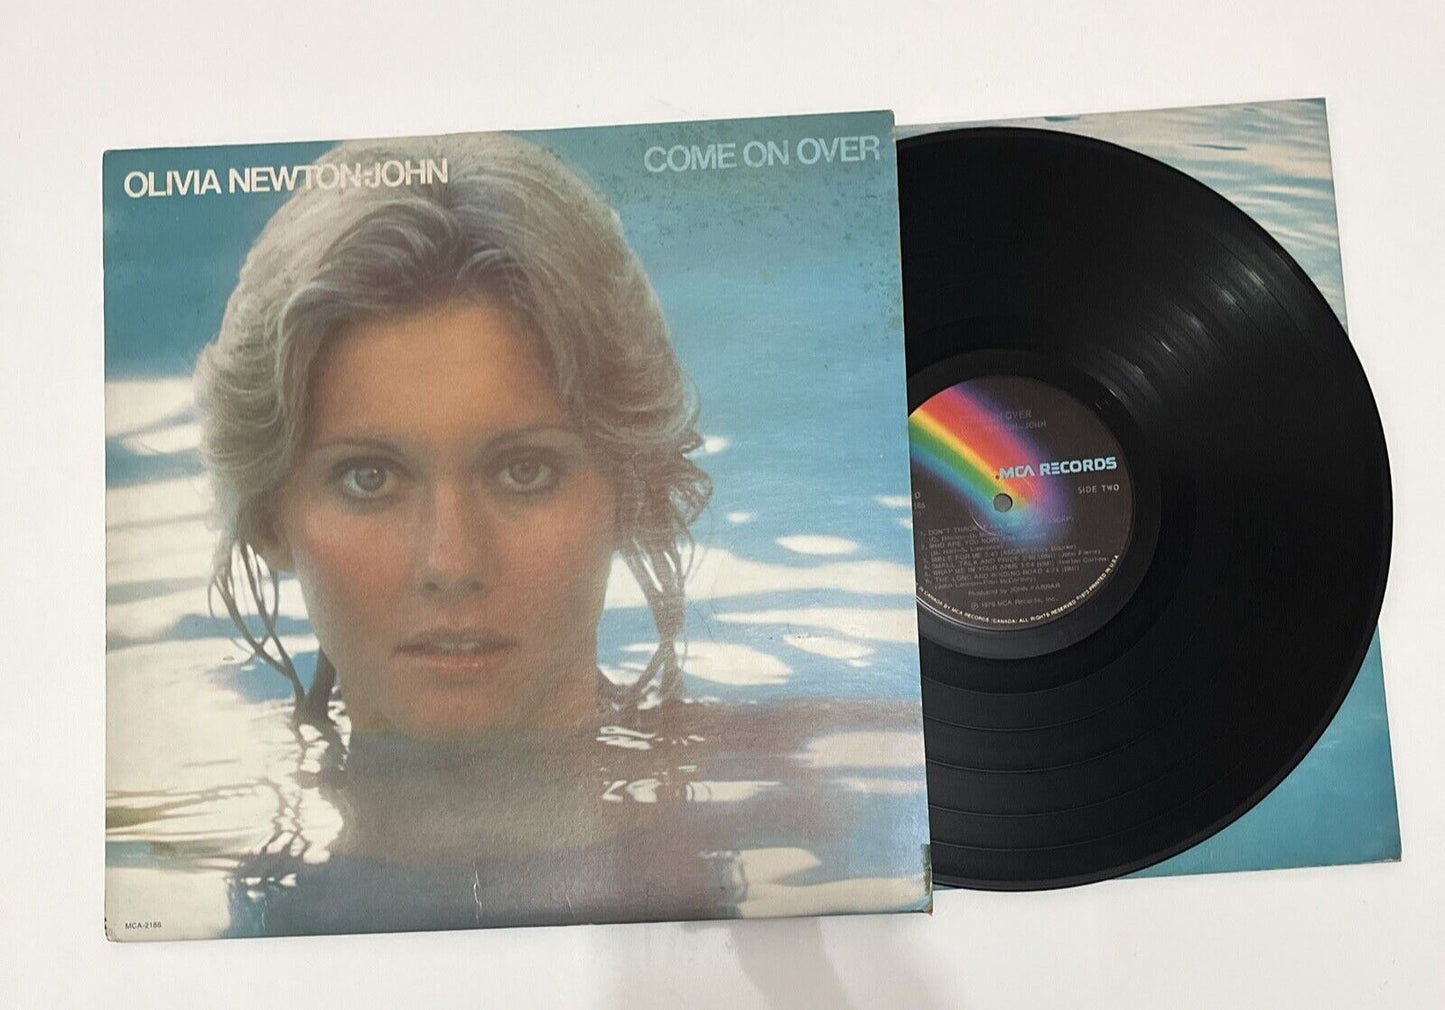 Olivia Newton John - Come on Over 1976 Vinyl Record LP